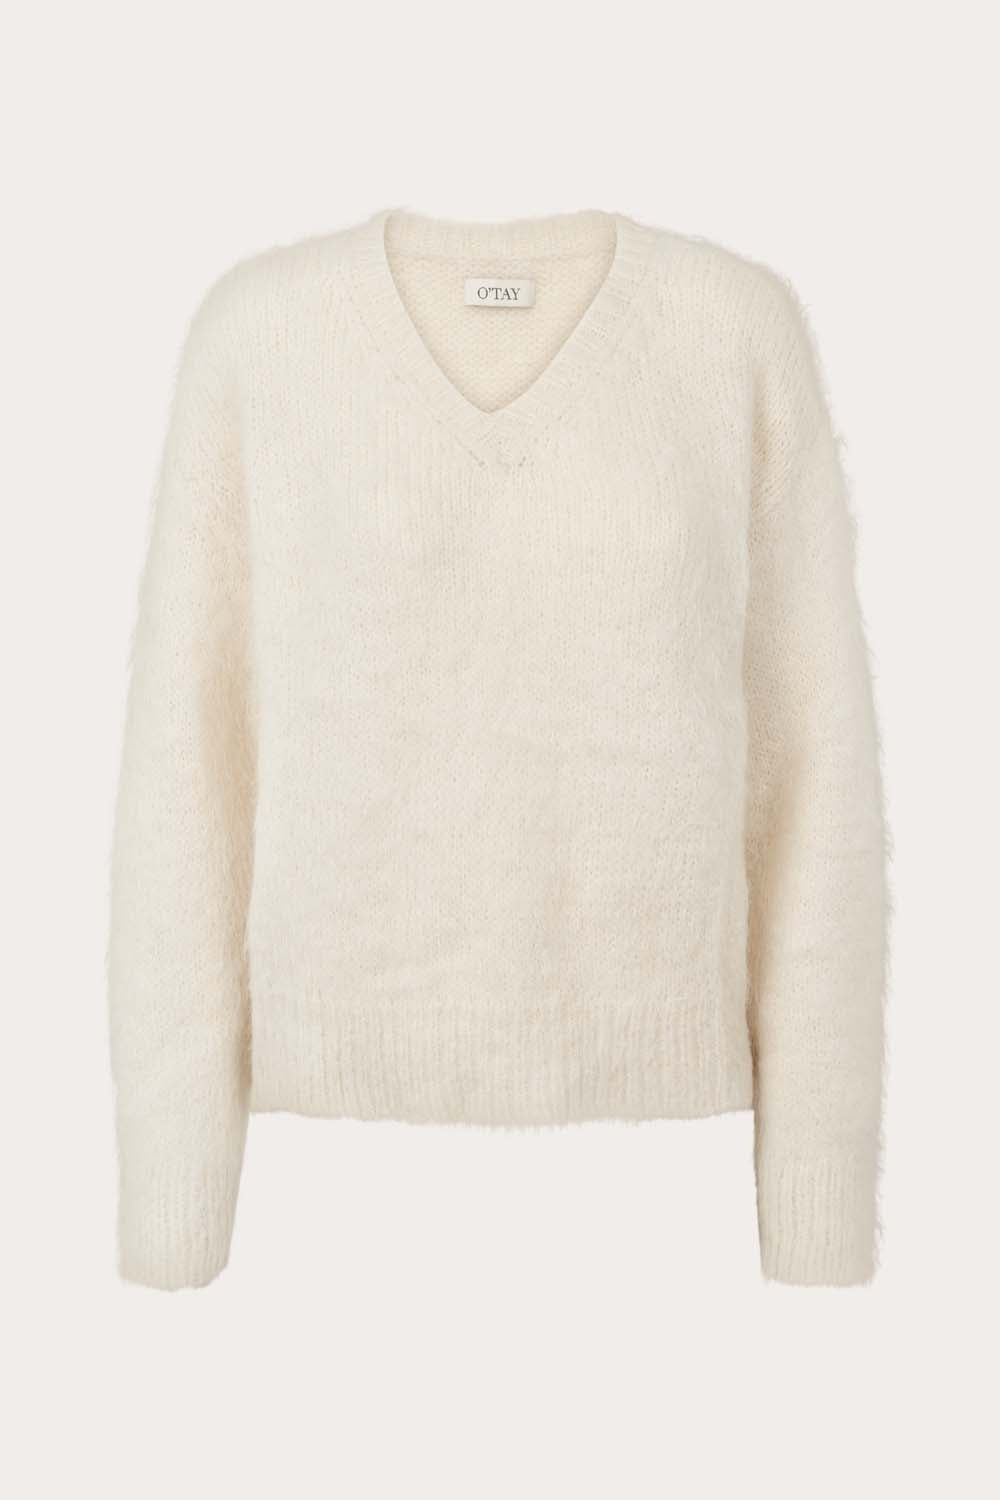 O'TAY Esmeralda Sweater Bluser Off White